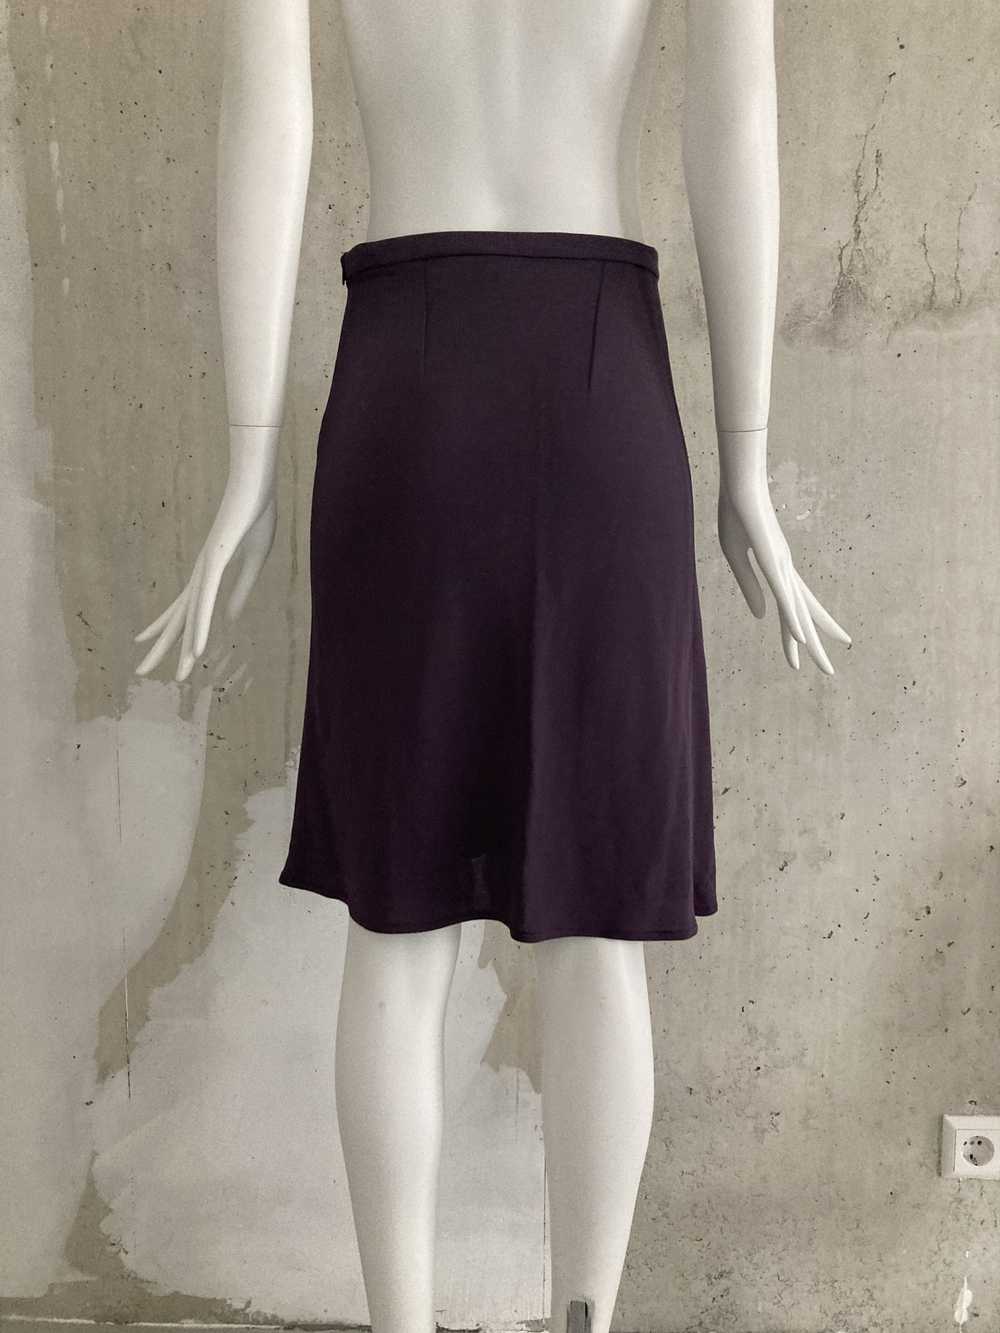 Ann Demeulemeester 90's Viscose Skirt - image 5